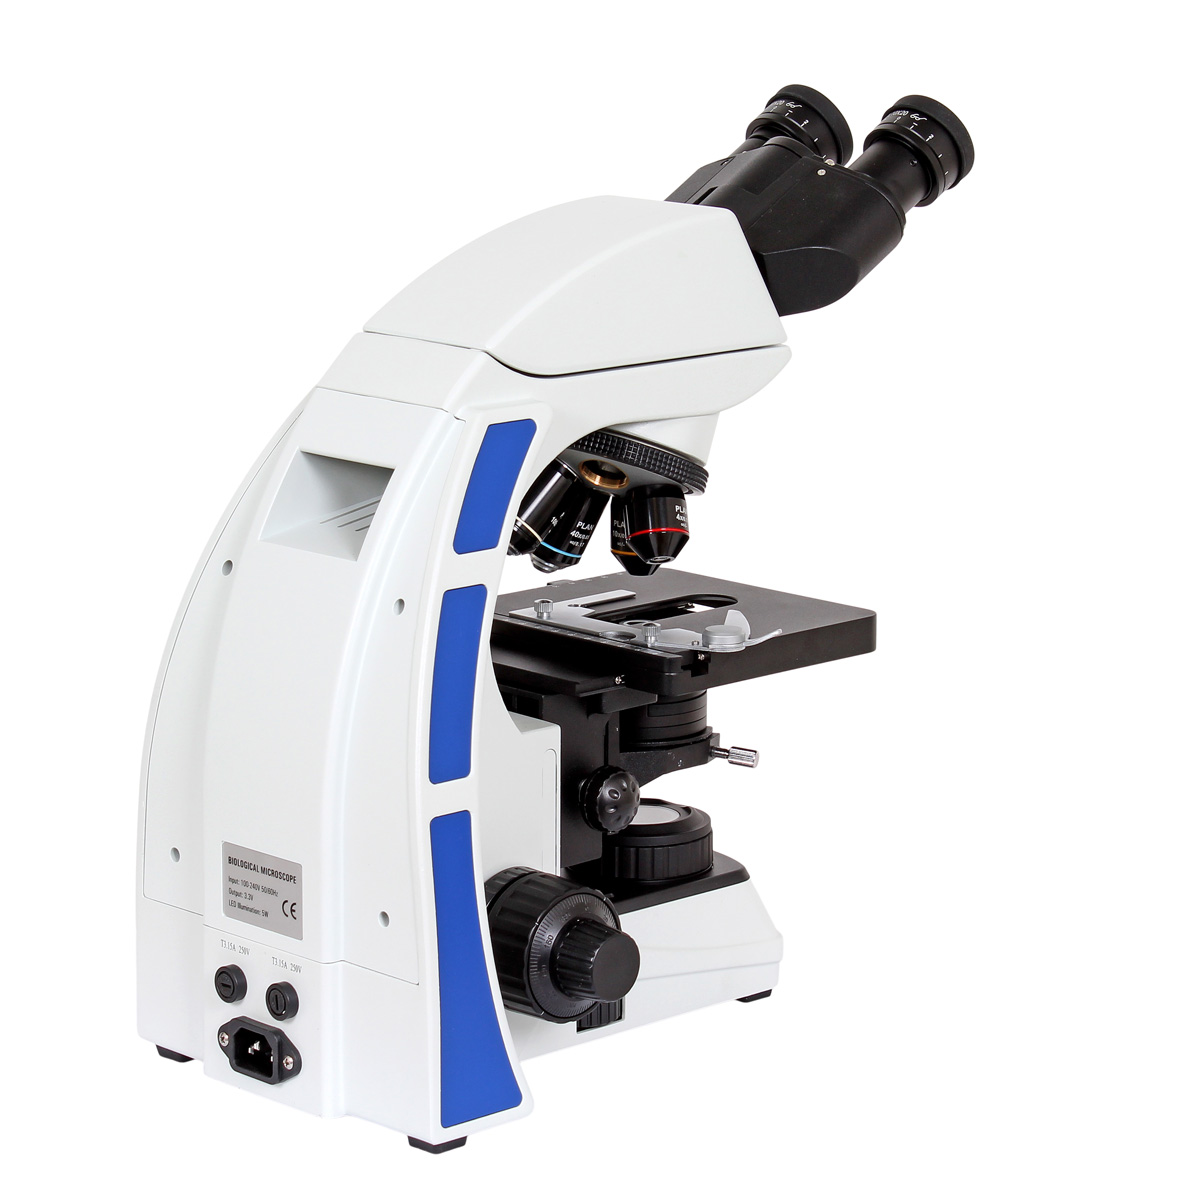 Mikroskop binokulärt SL-750